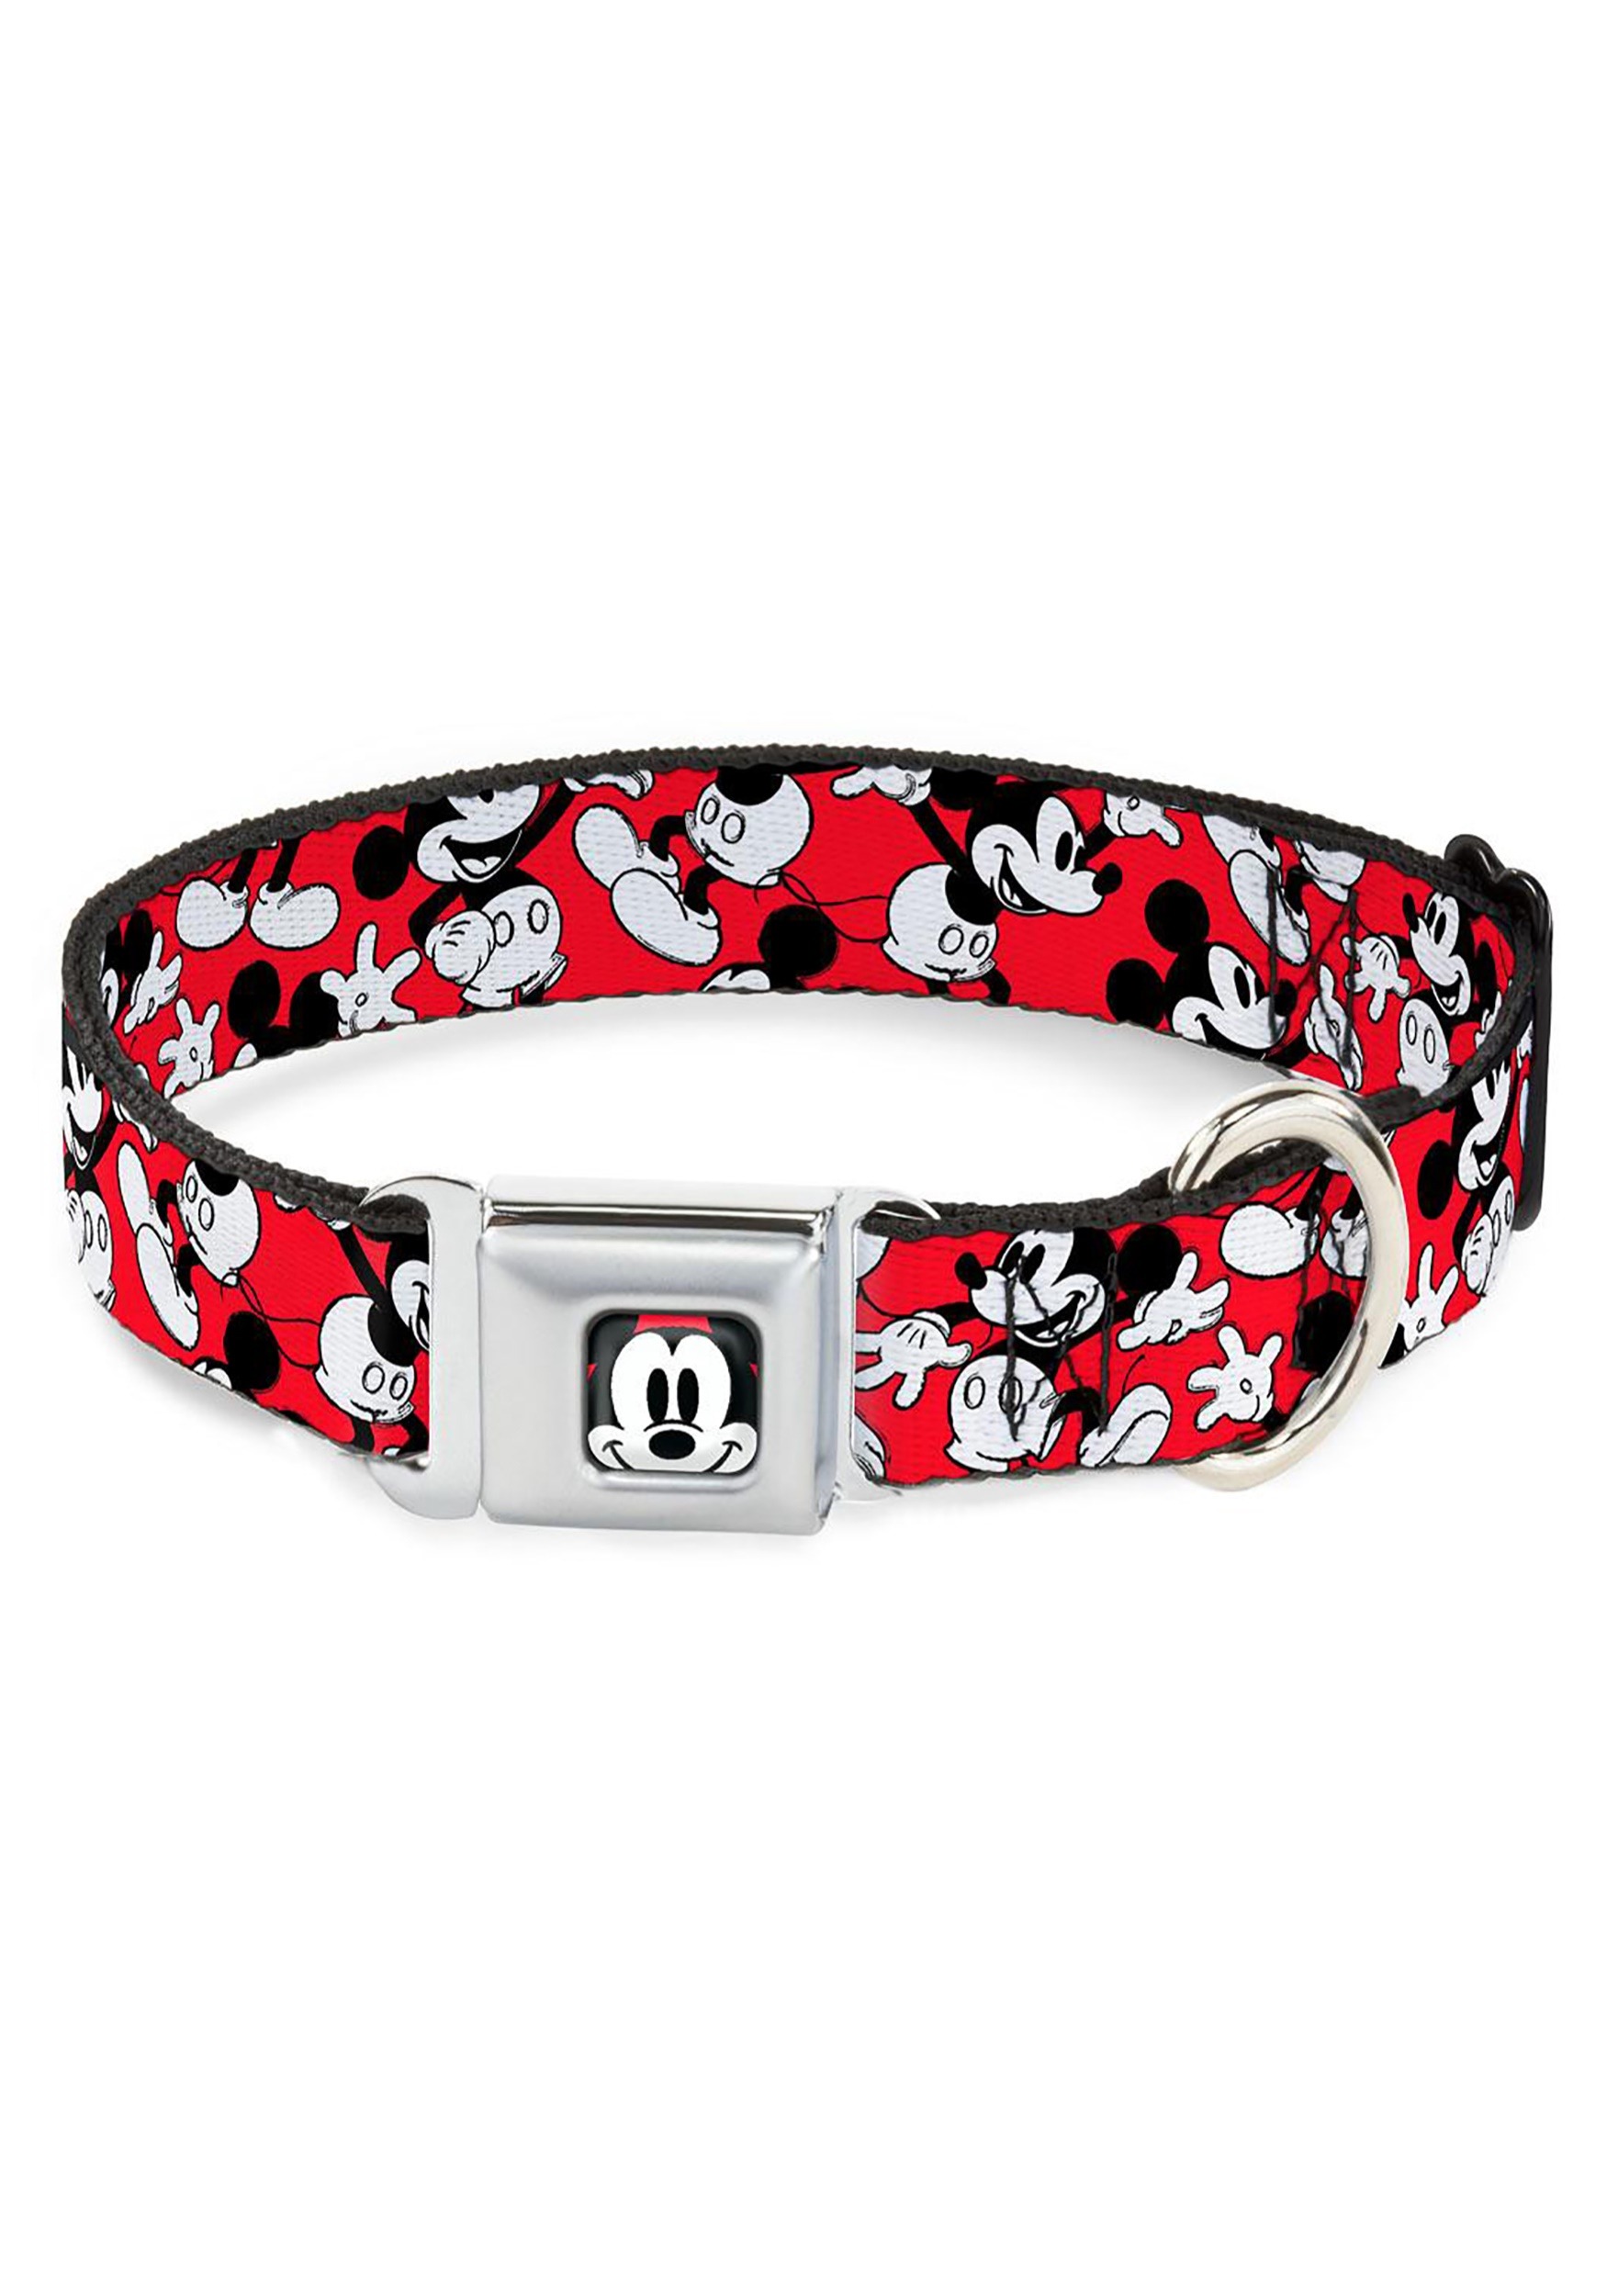 Mickey Mouse Faces -Seatbelt Buckle- Dog Collar- 1